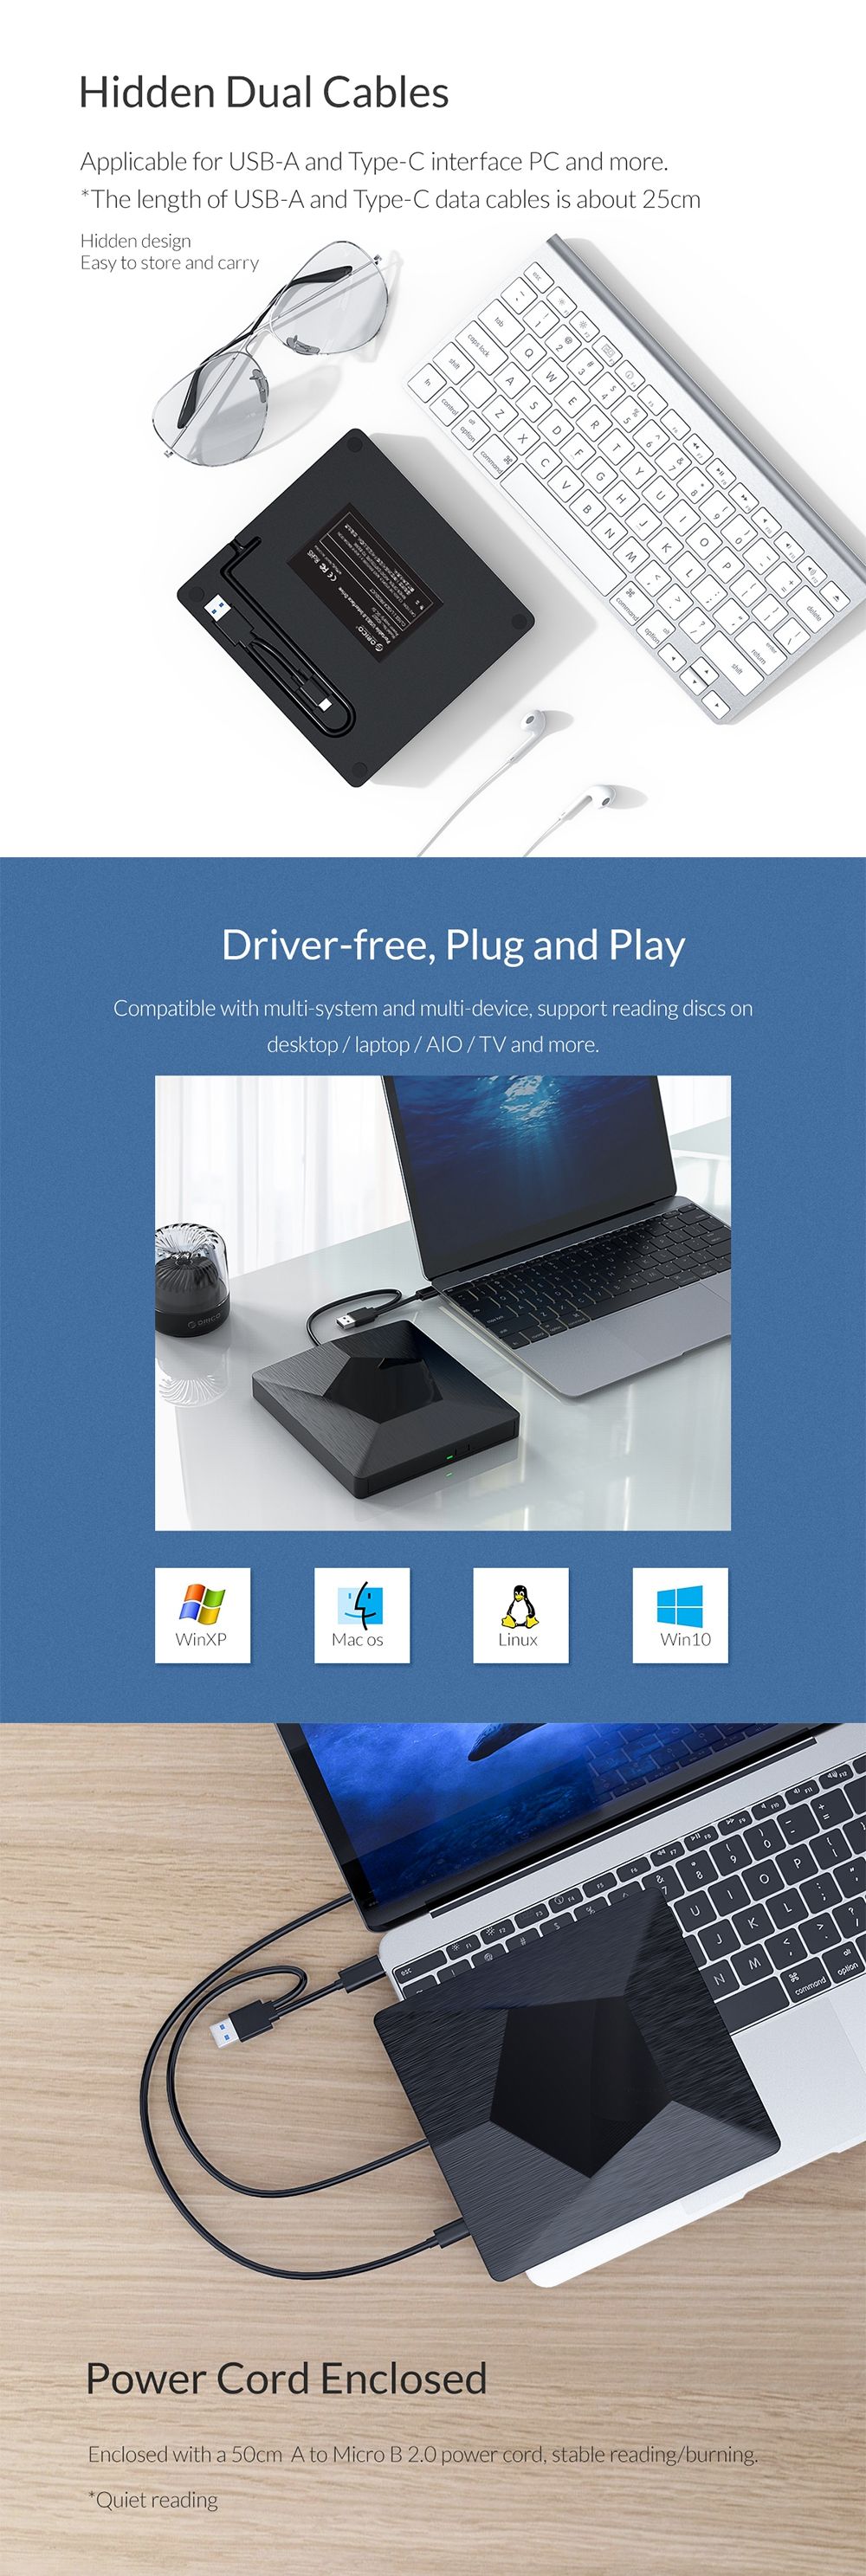 ORICO-XD007-BK-BP-USB-30-External-DVD-RW-DVD-Burner-Optical-Drive-for-Desktop-Laptop-Windows-1582841